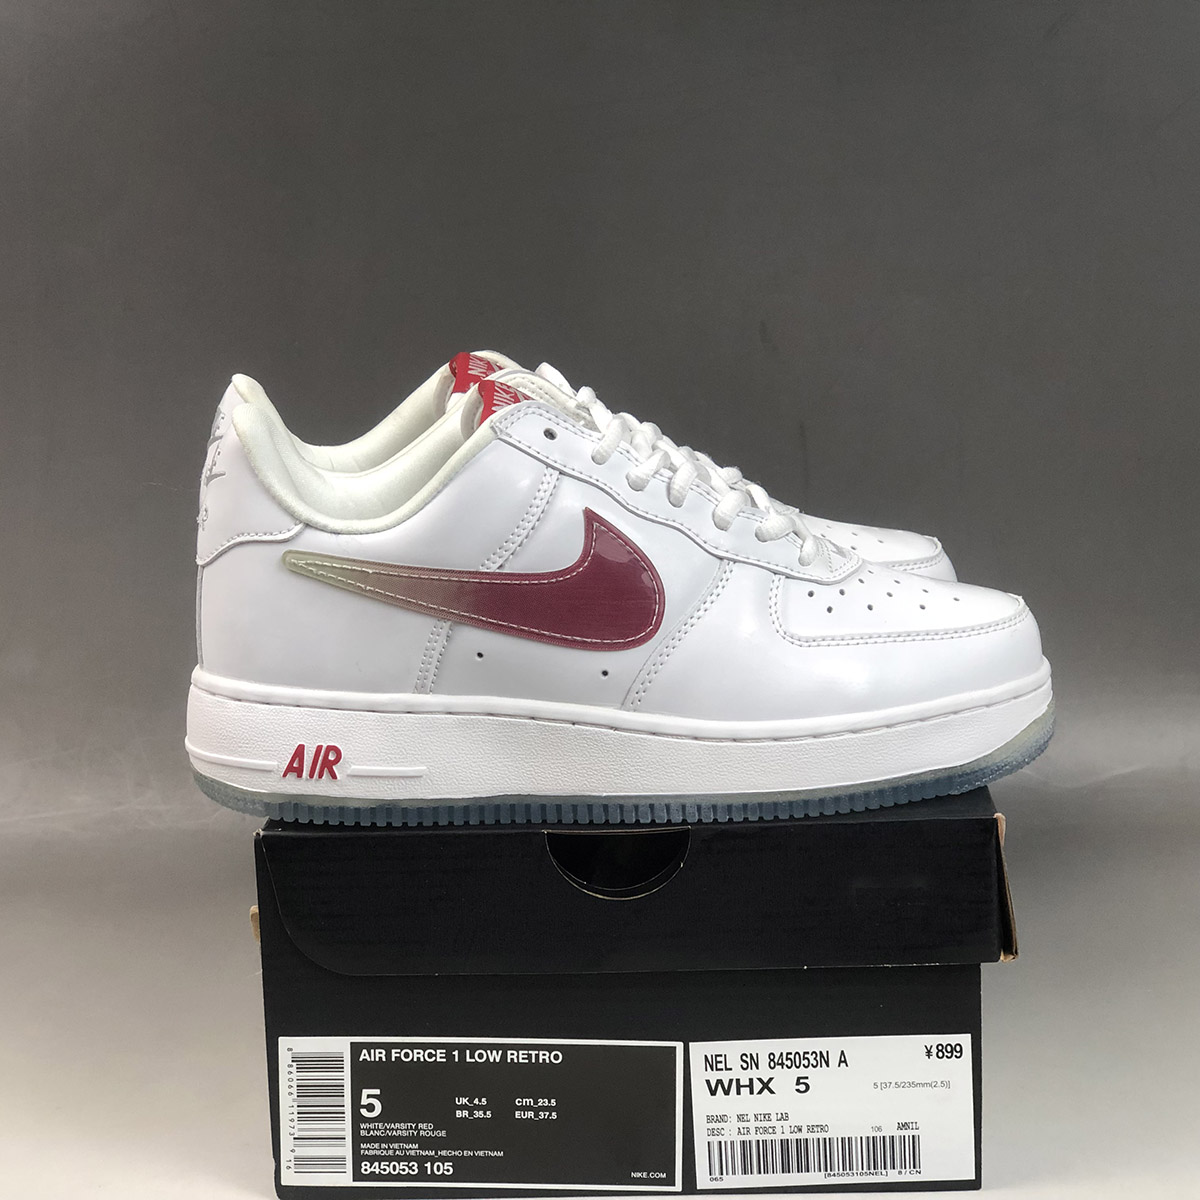 Nike Air Force 1 Low “Taiwan” White 